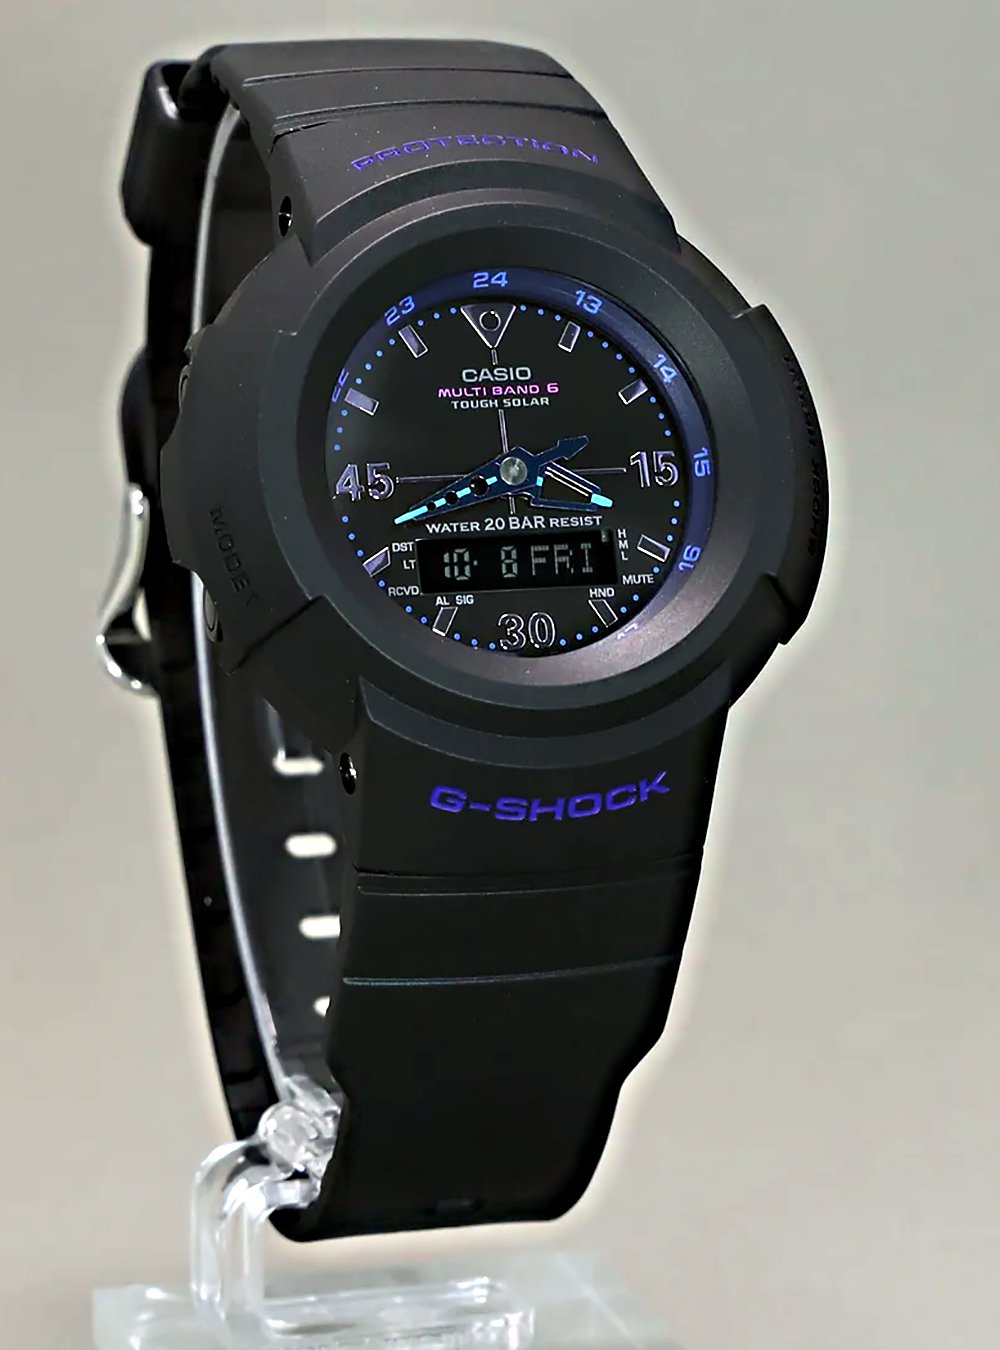 Casio Men's G-Shock Analog-Digital Tough Solar Watch 